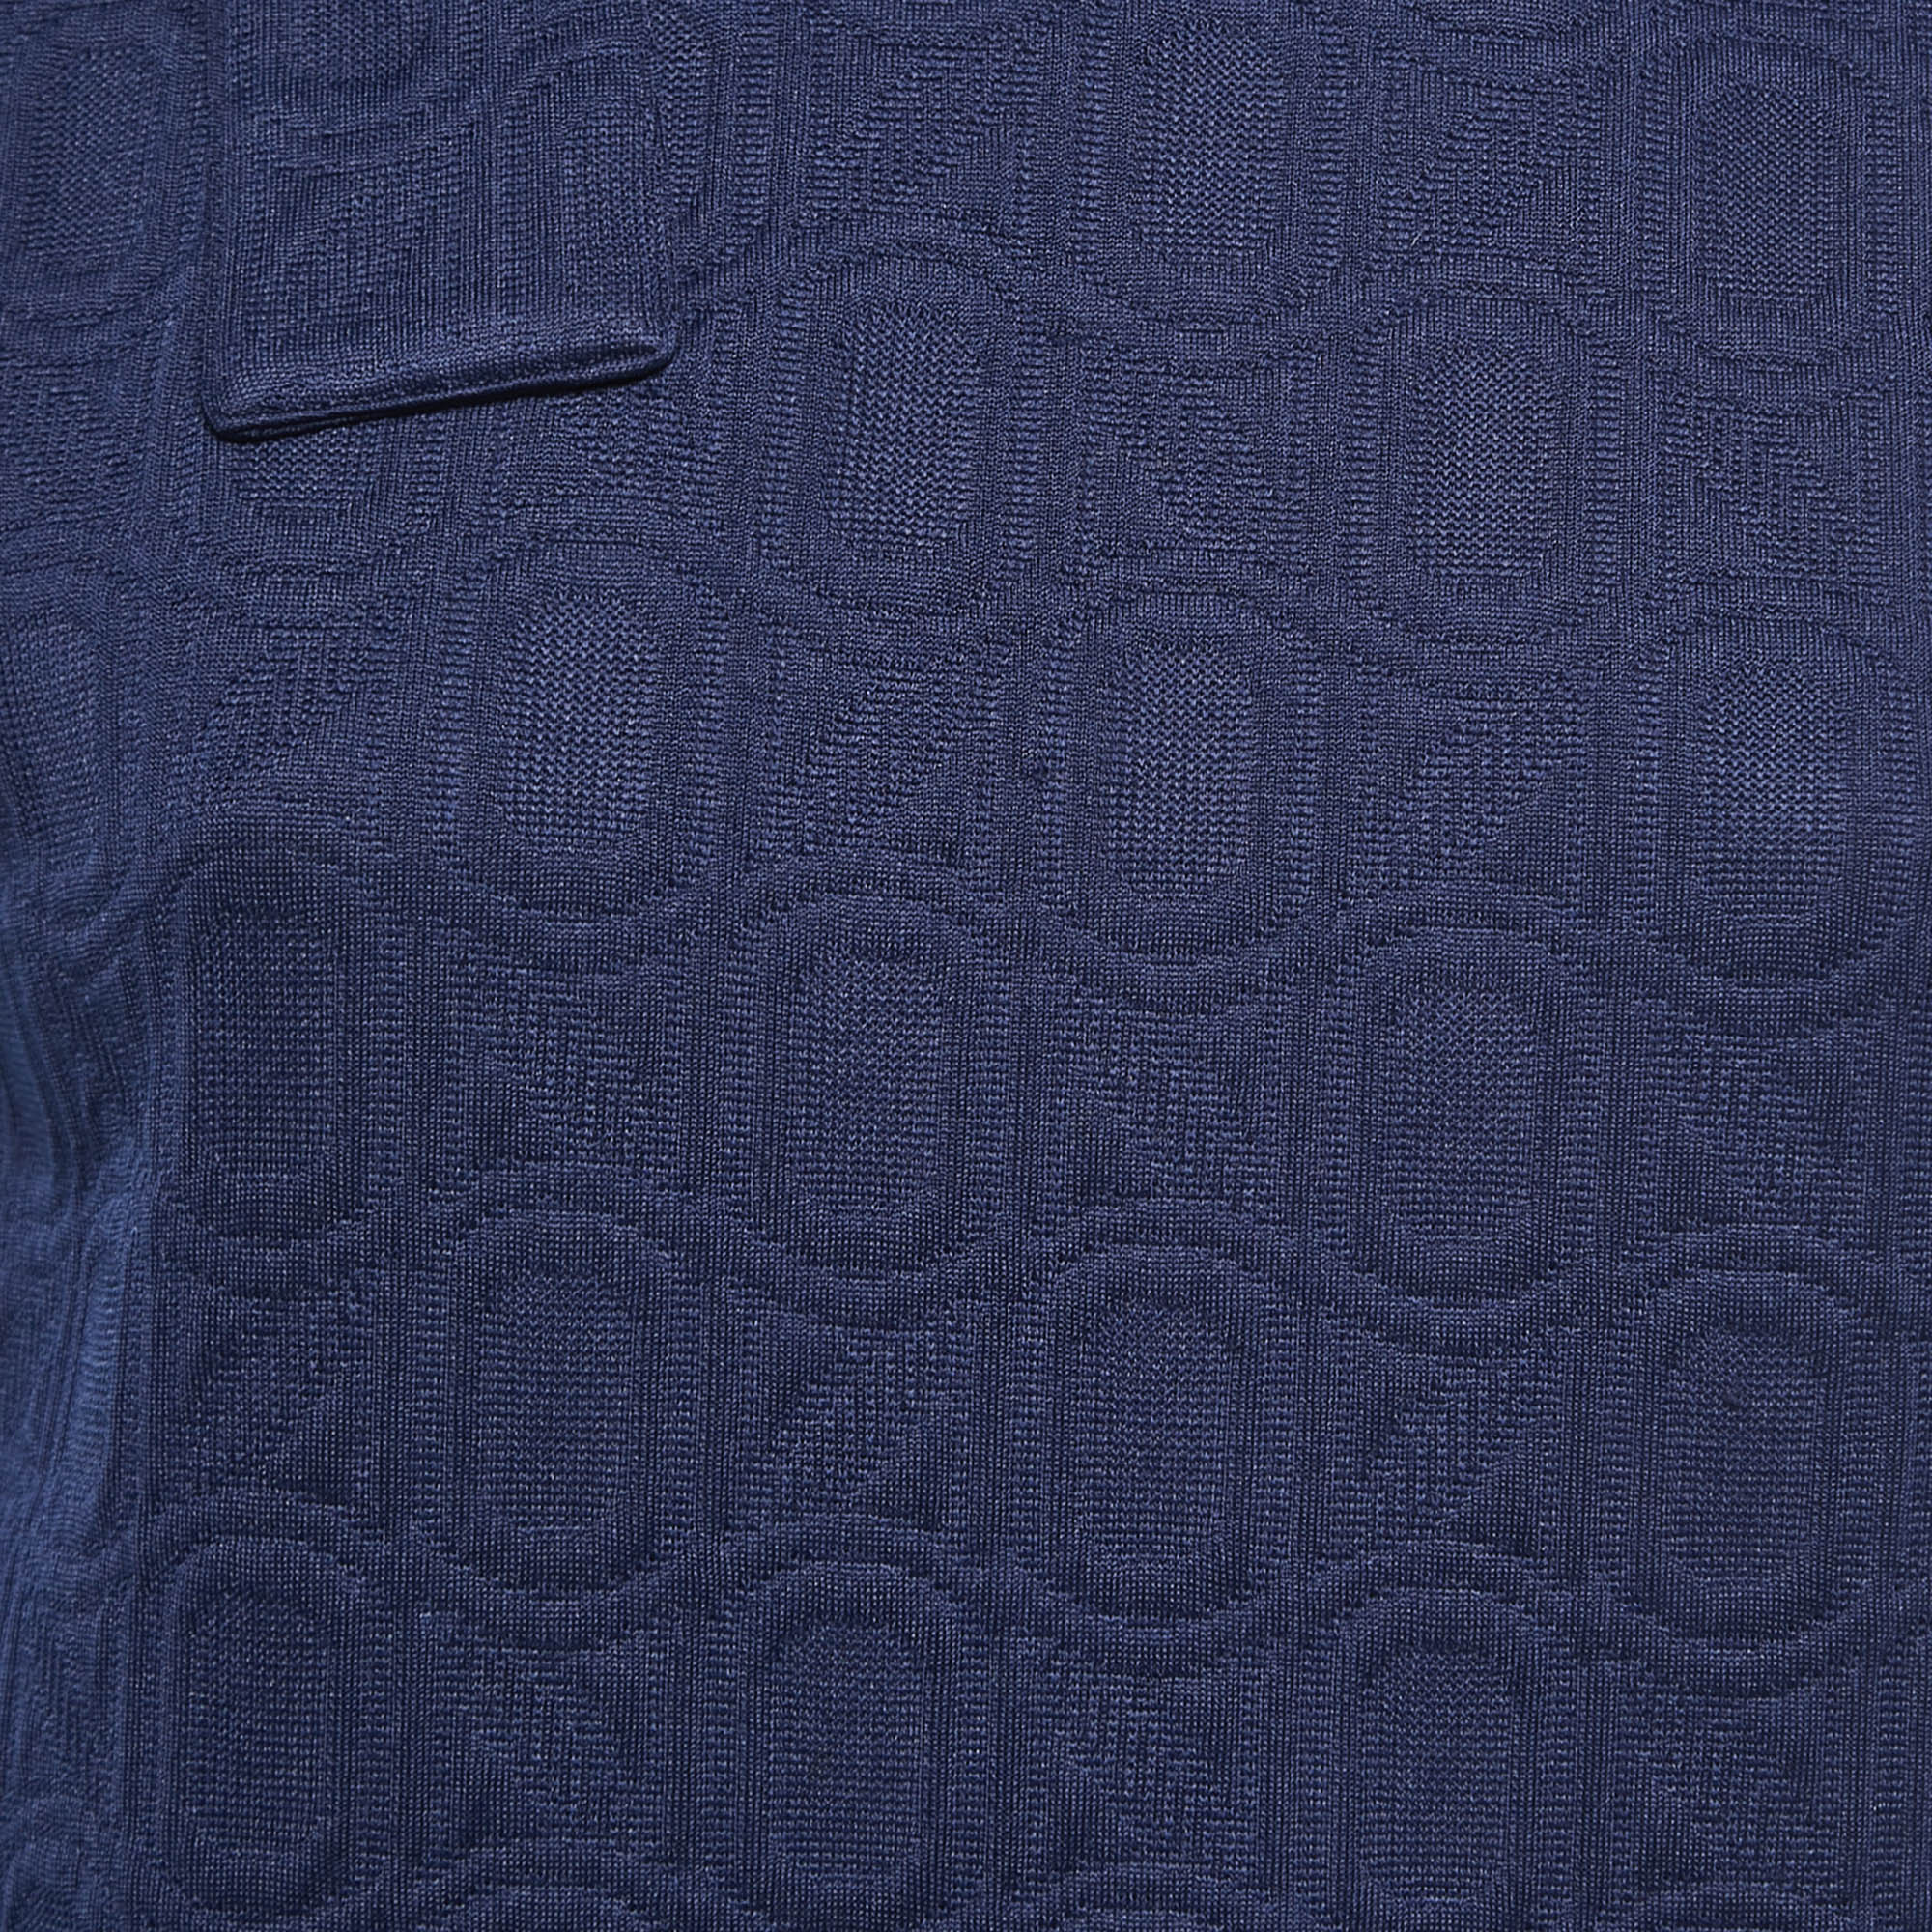 Marni Navy Blue Jacquard Bow Detail Sleeveless Short Dress S